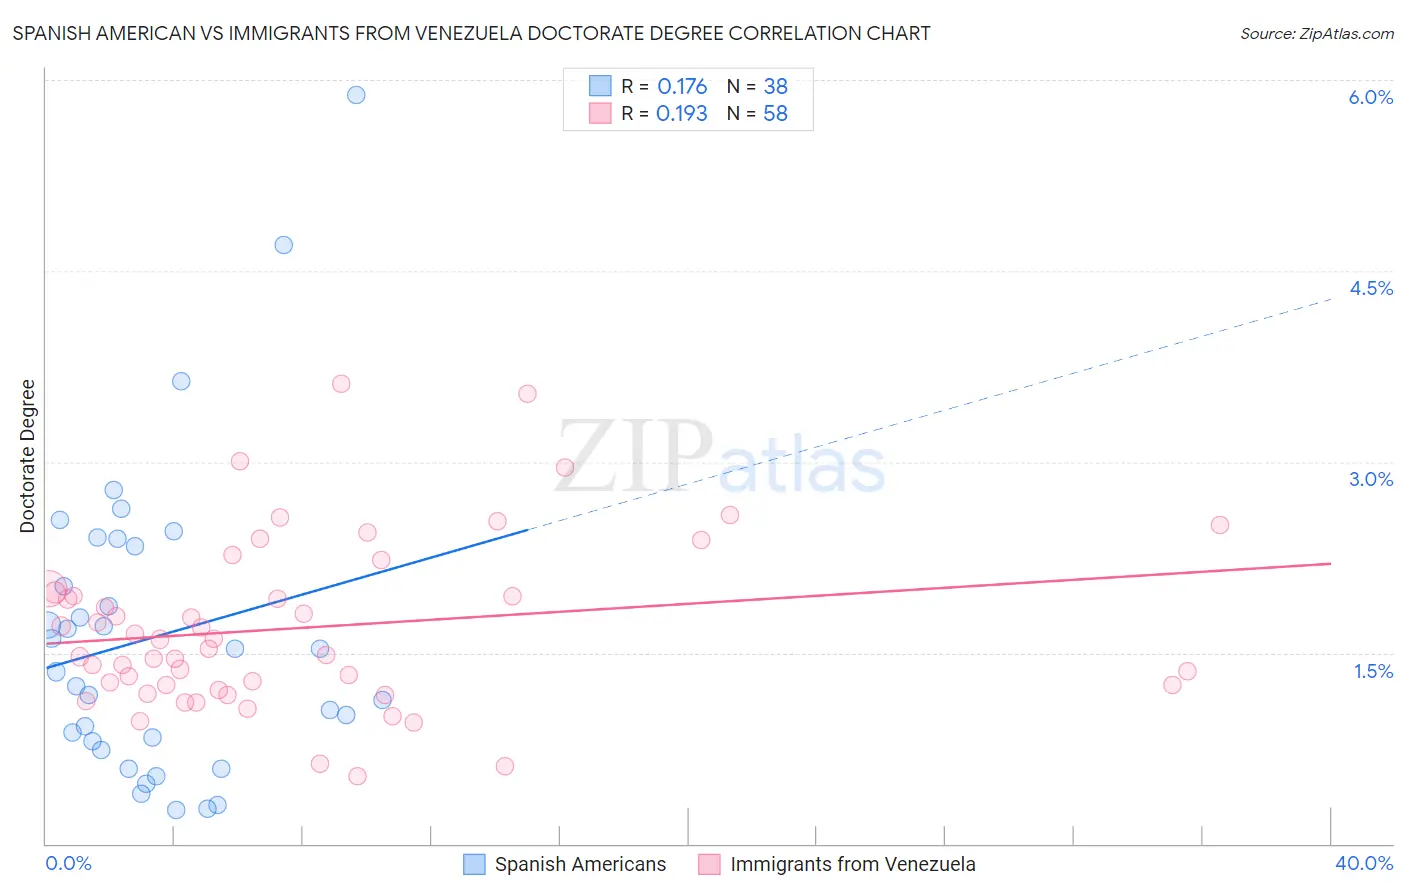 Spanish American vs Immigrants from Venezuela Doctorate Degree